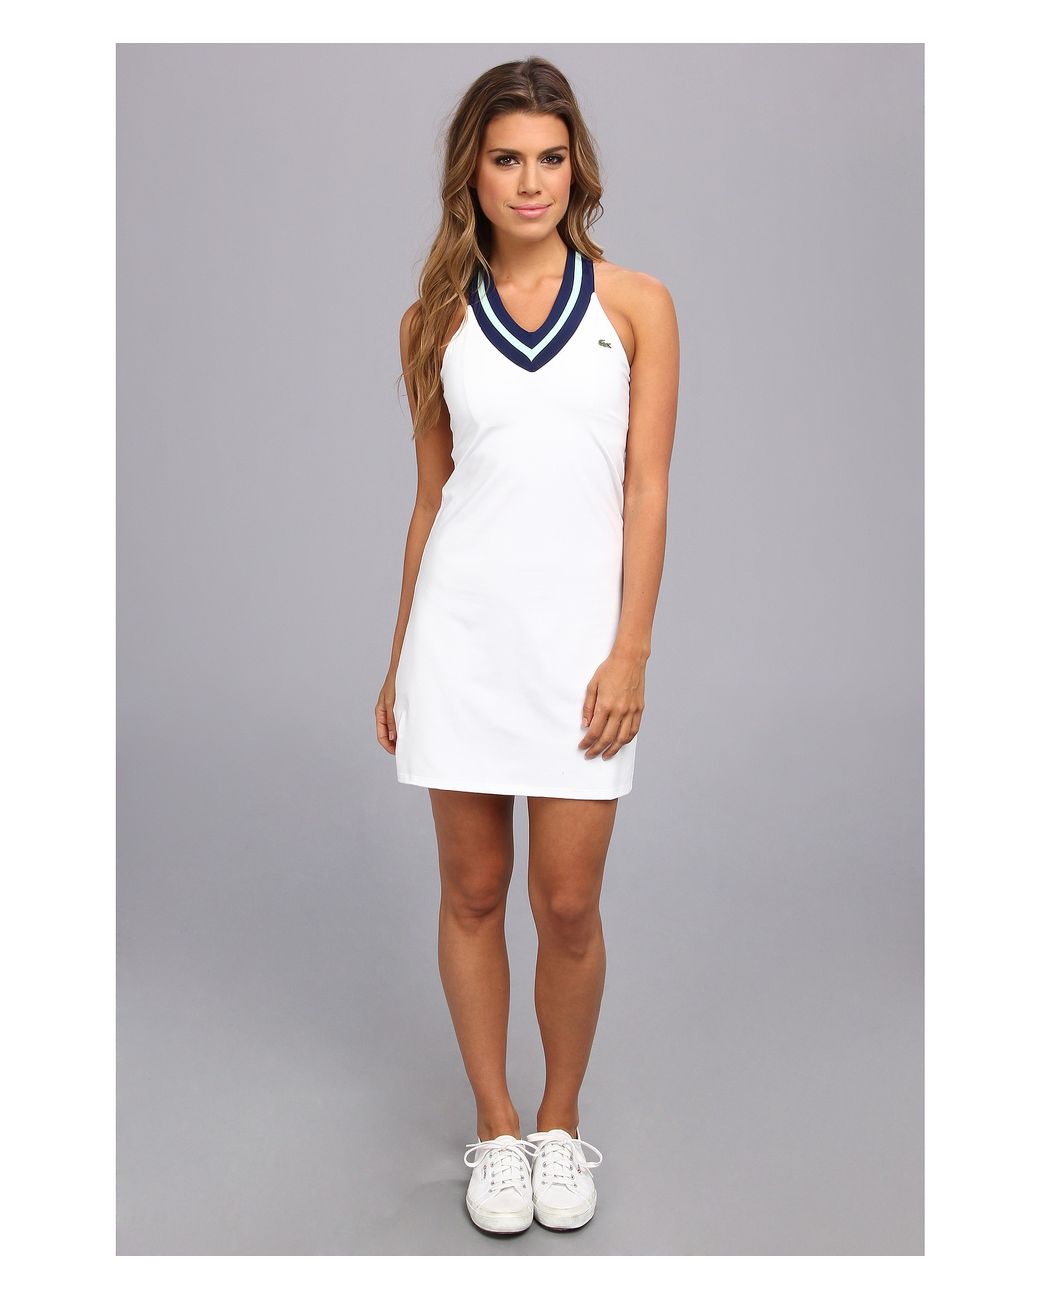 Lacoste Sleeveless Technical Vneck Tennis Dress in Blue | Lyst